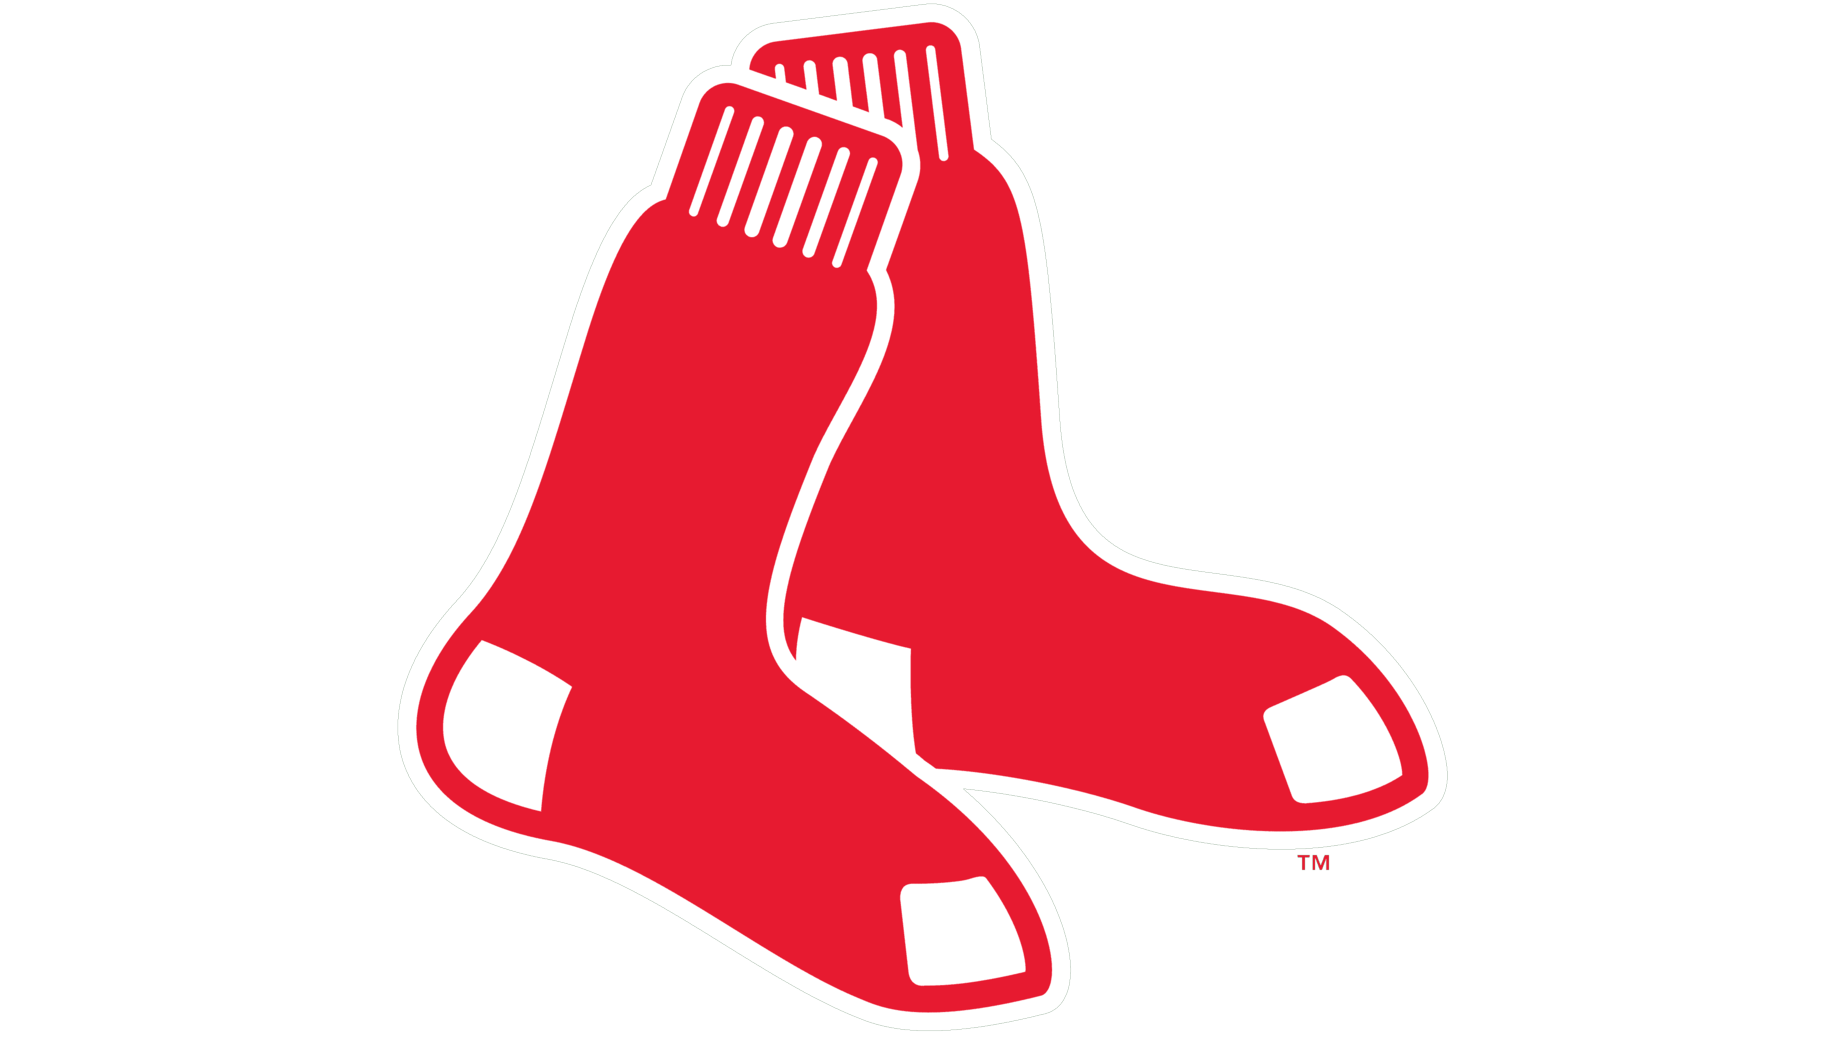 Boston red sox logo